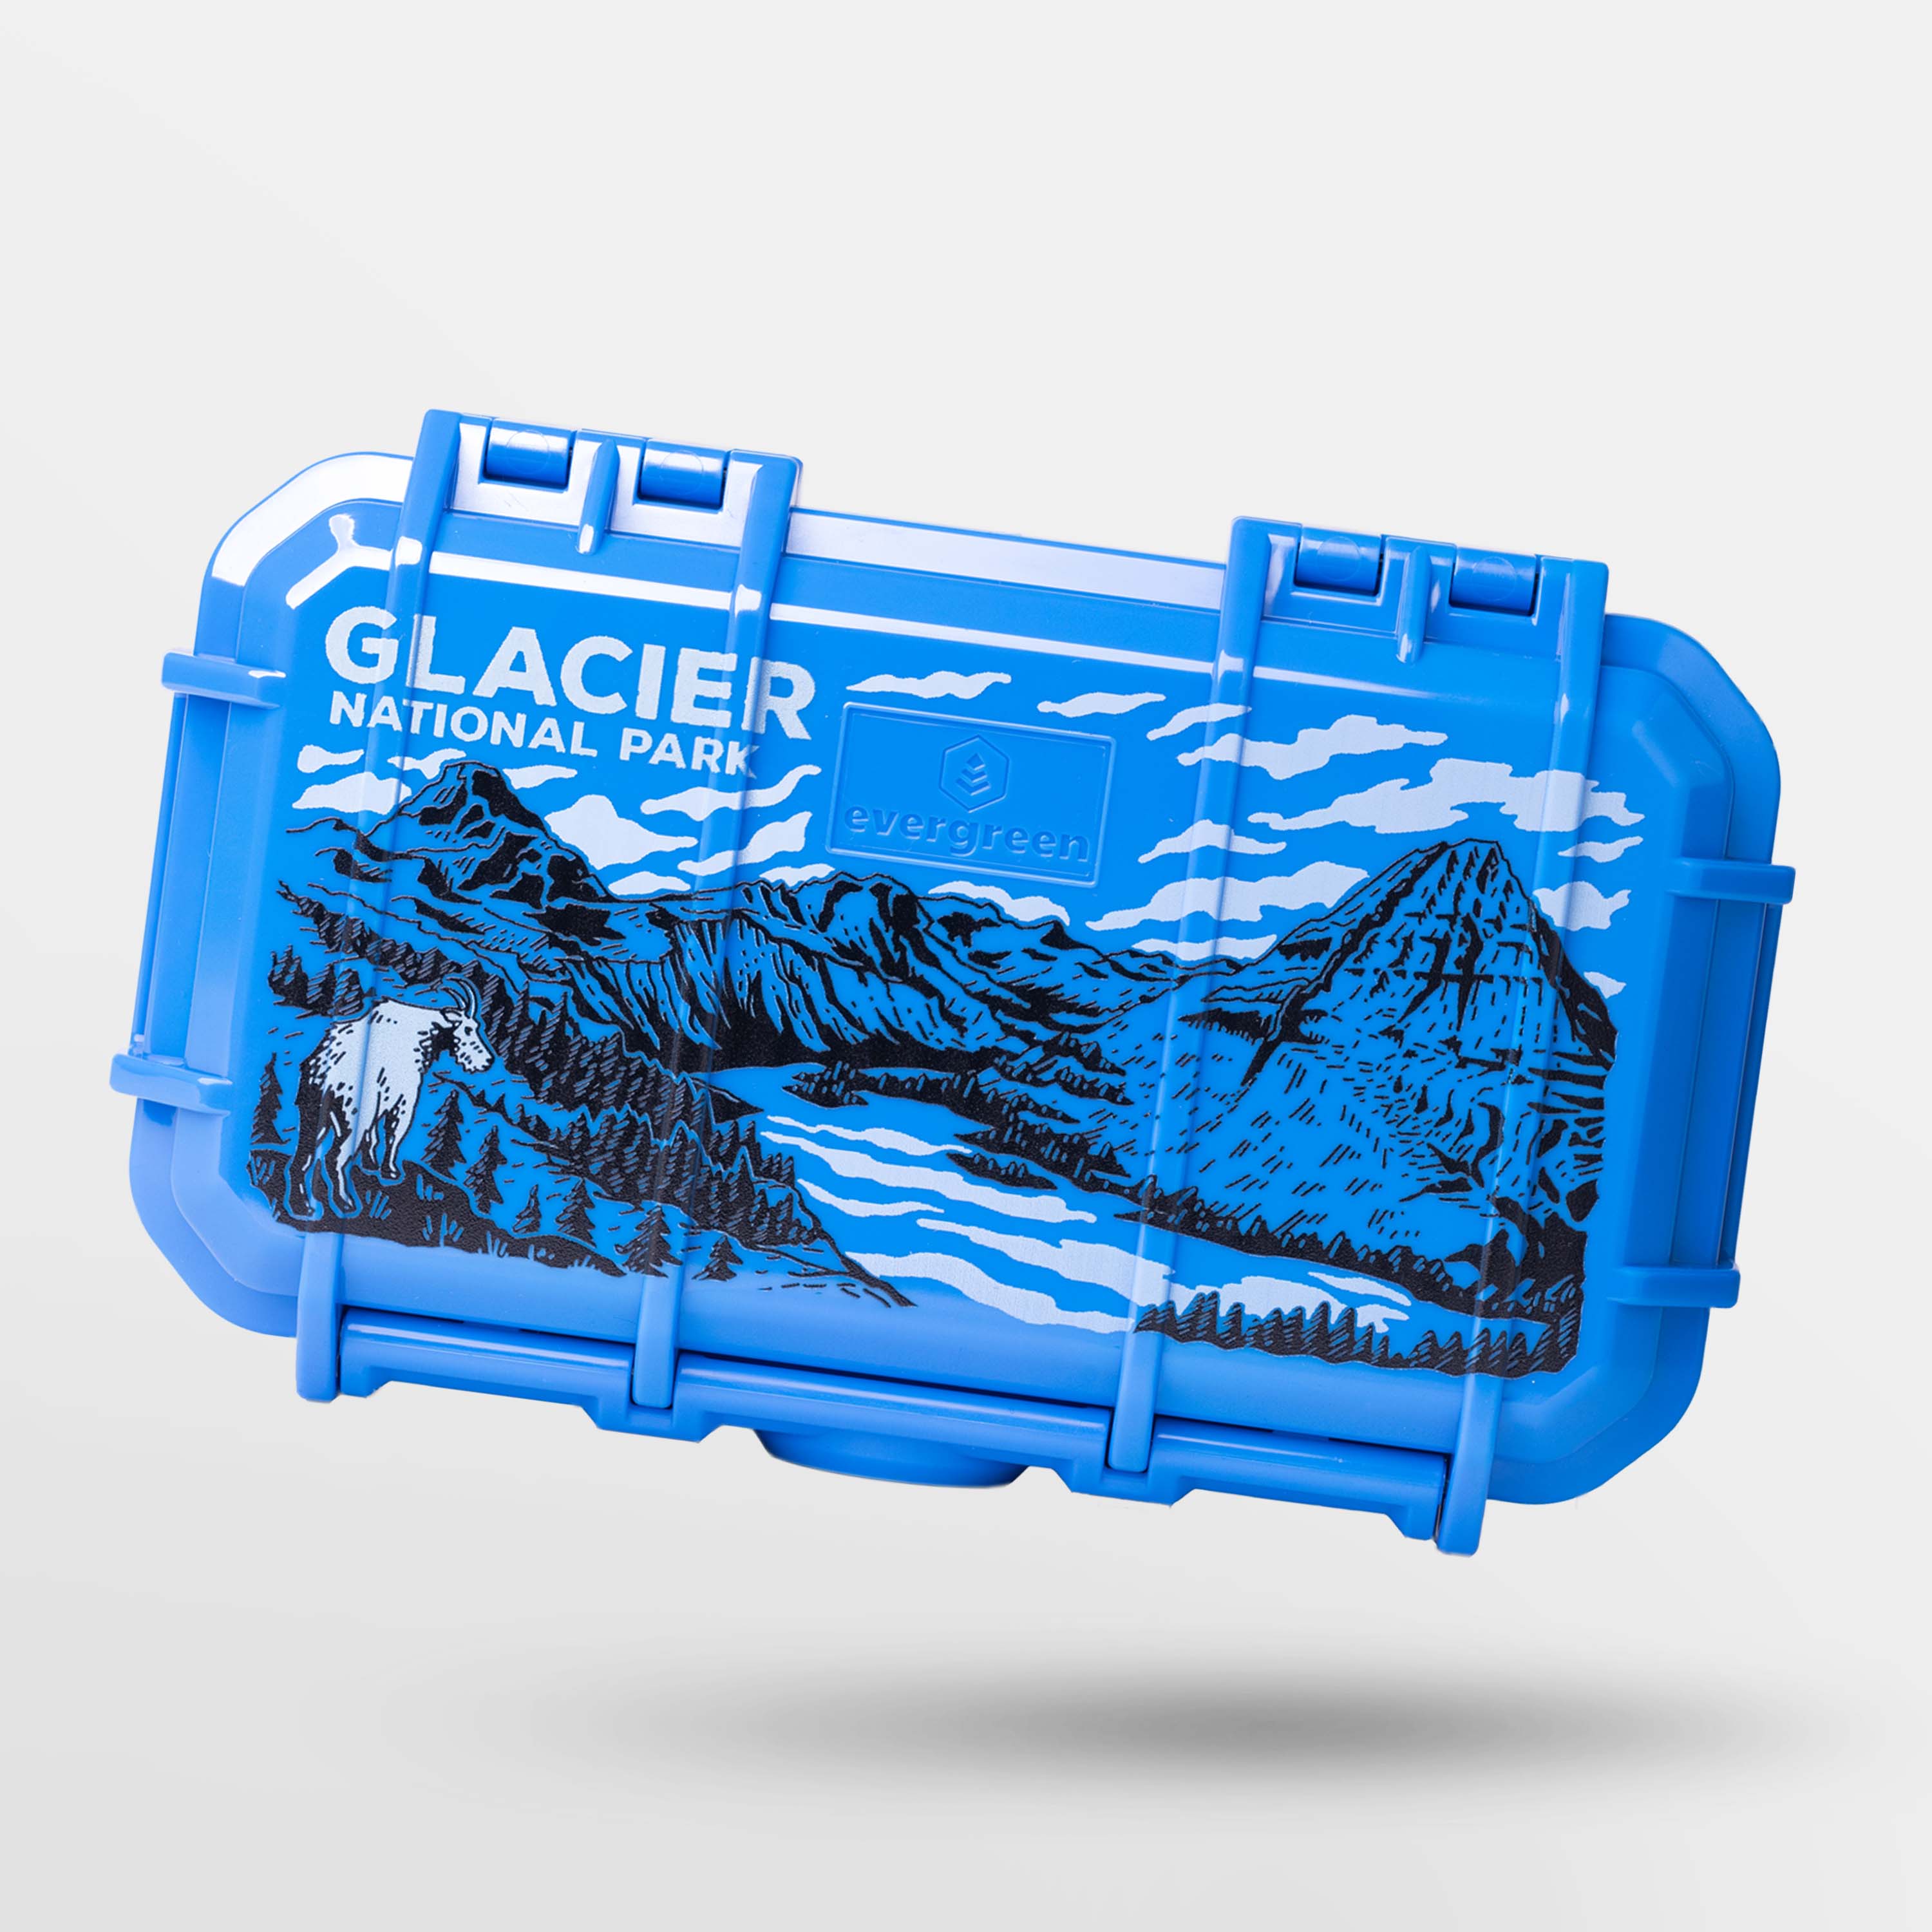 GlacierNPFloatingImageExportforWebsite.jpg